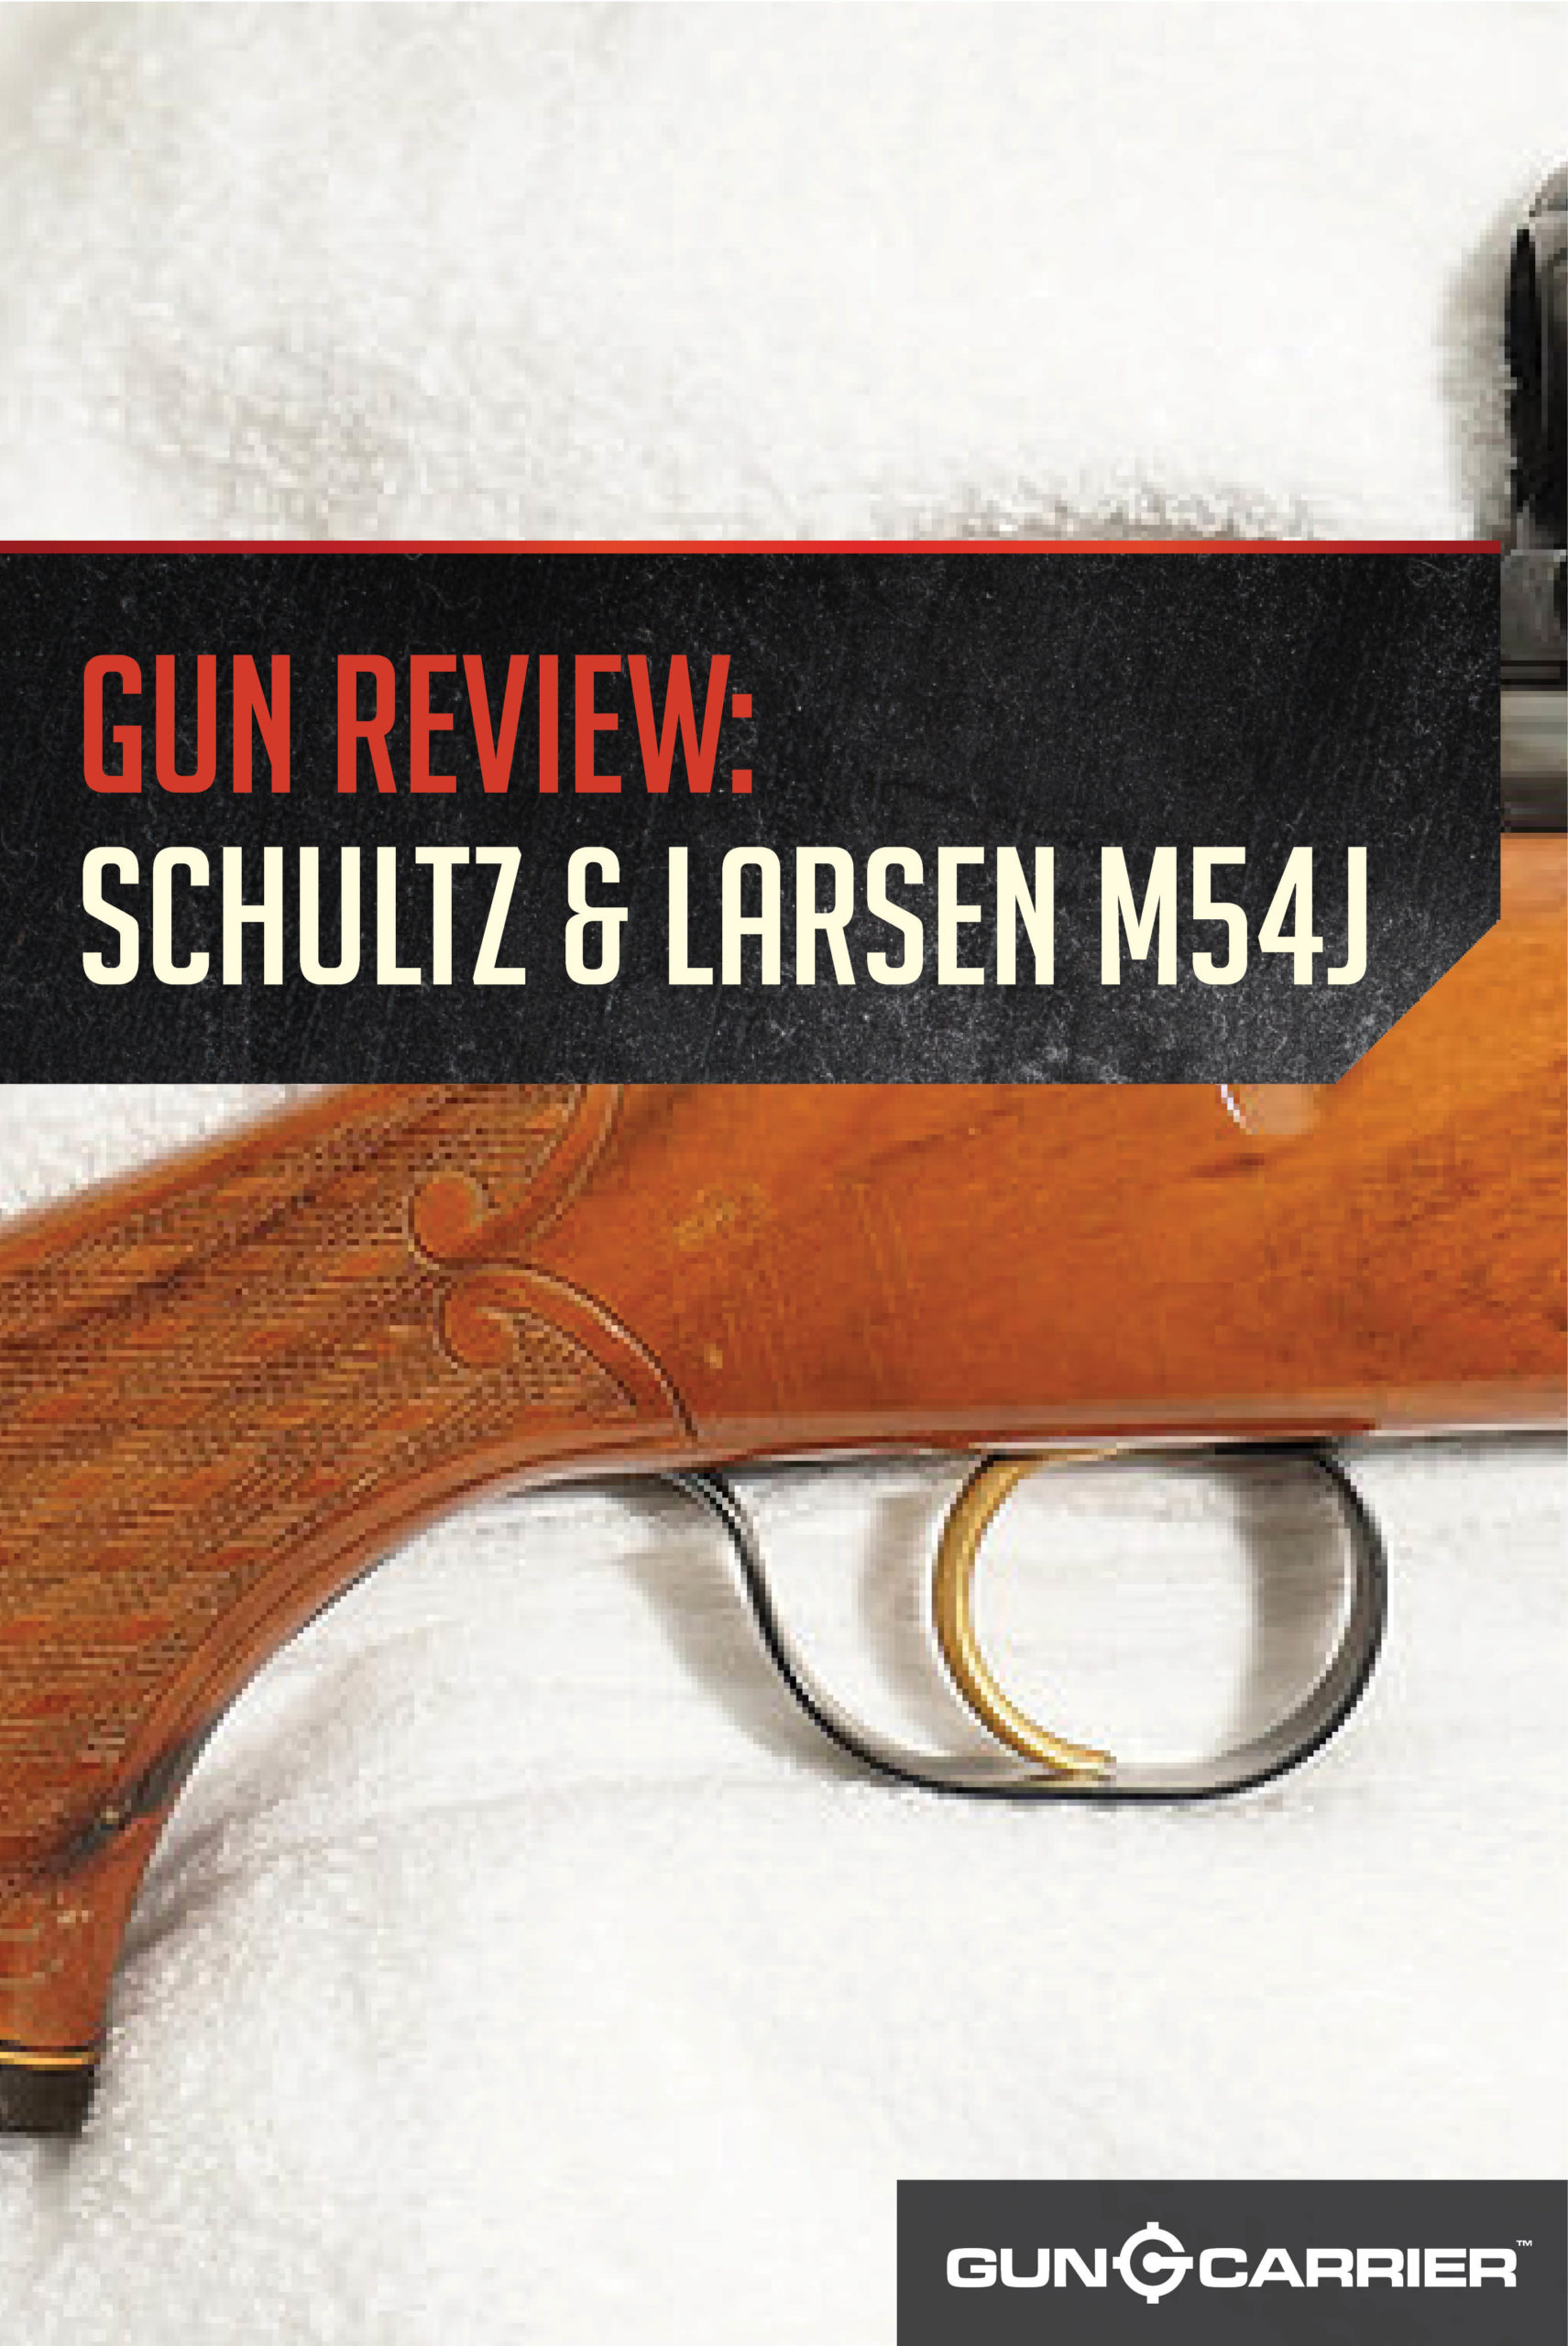 Schultz & Larsen M54J Review by Gun Carrier at https://guncarrier.com/schultz-larsen-m54j-review/